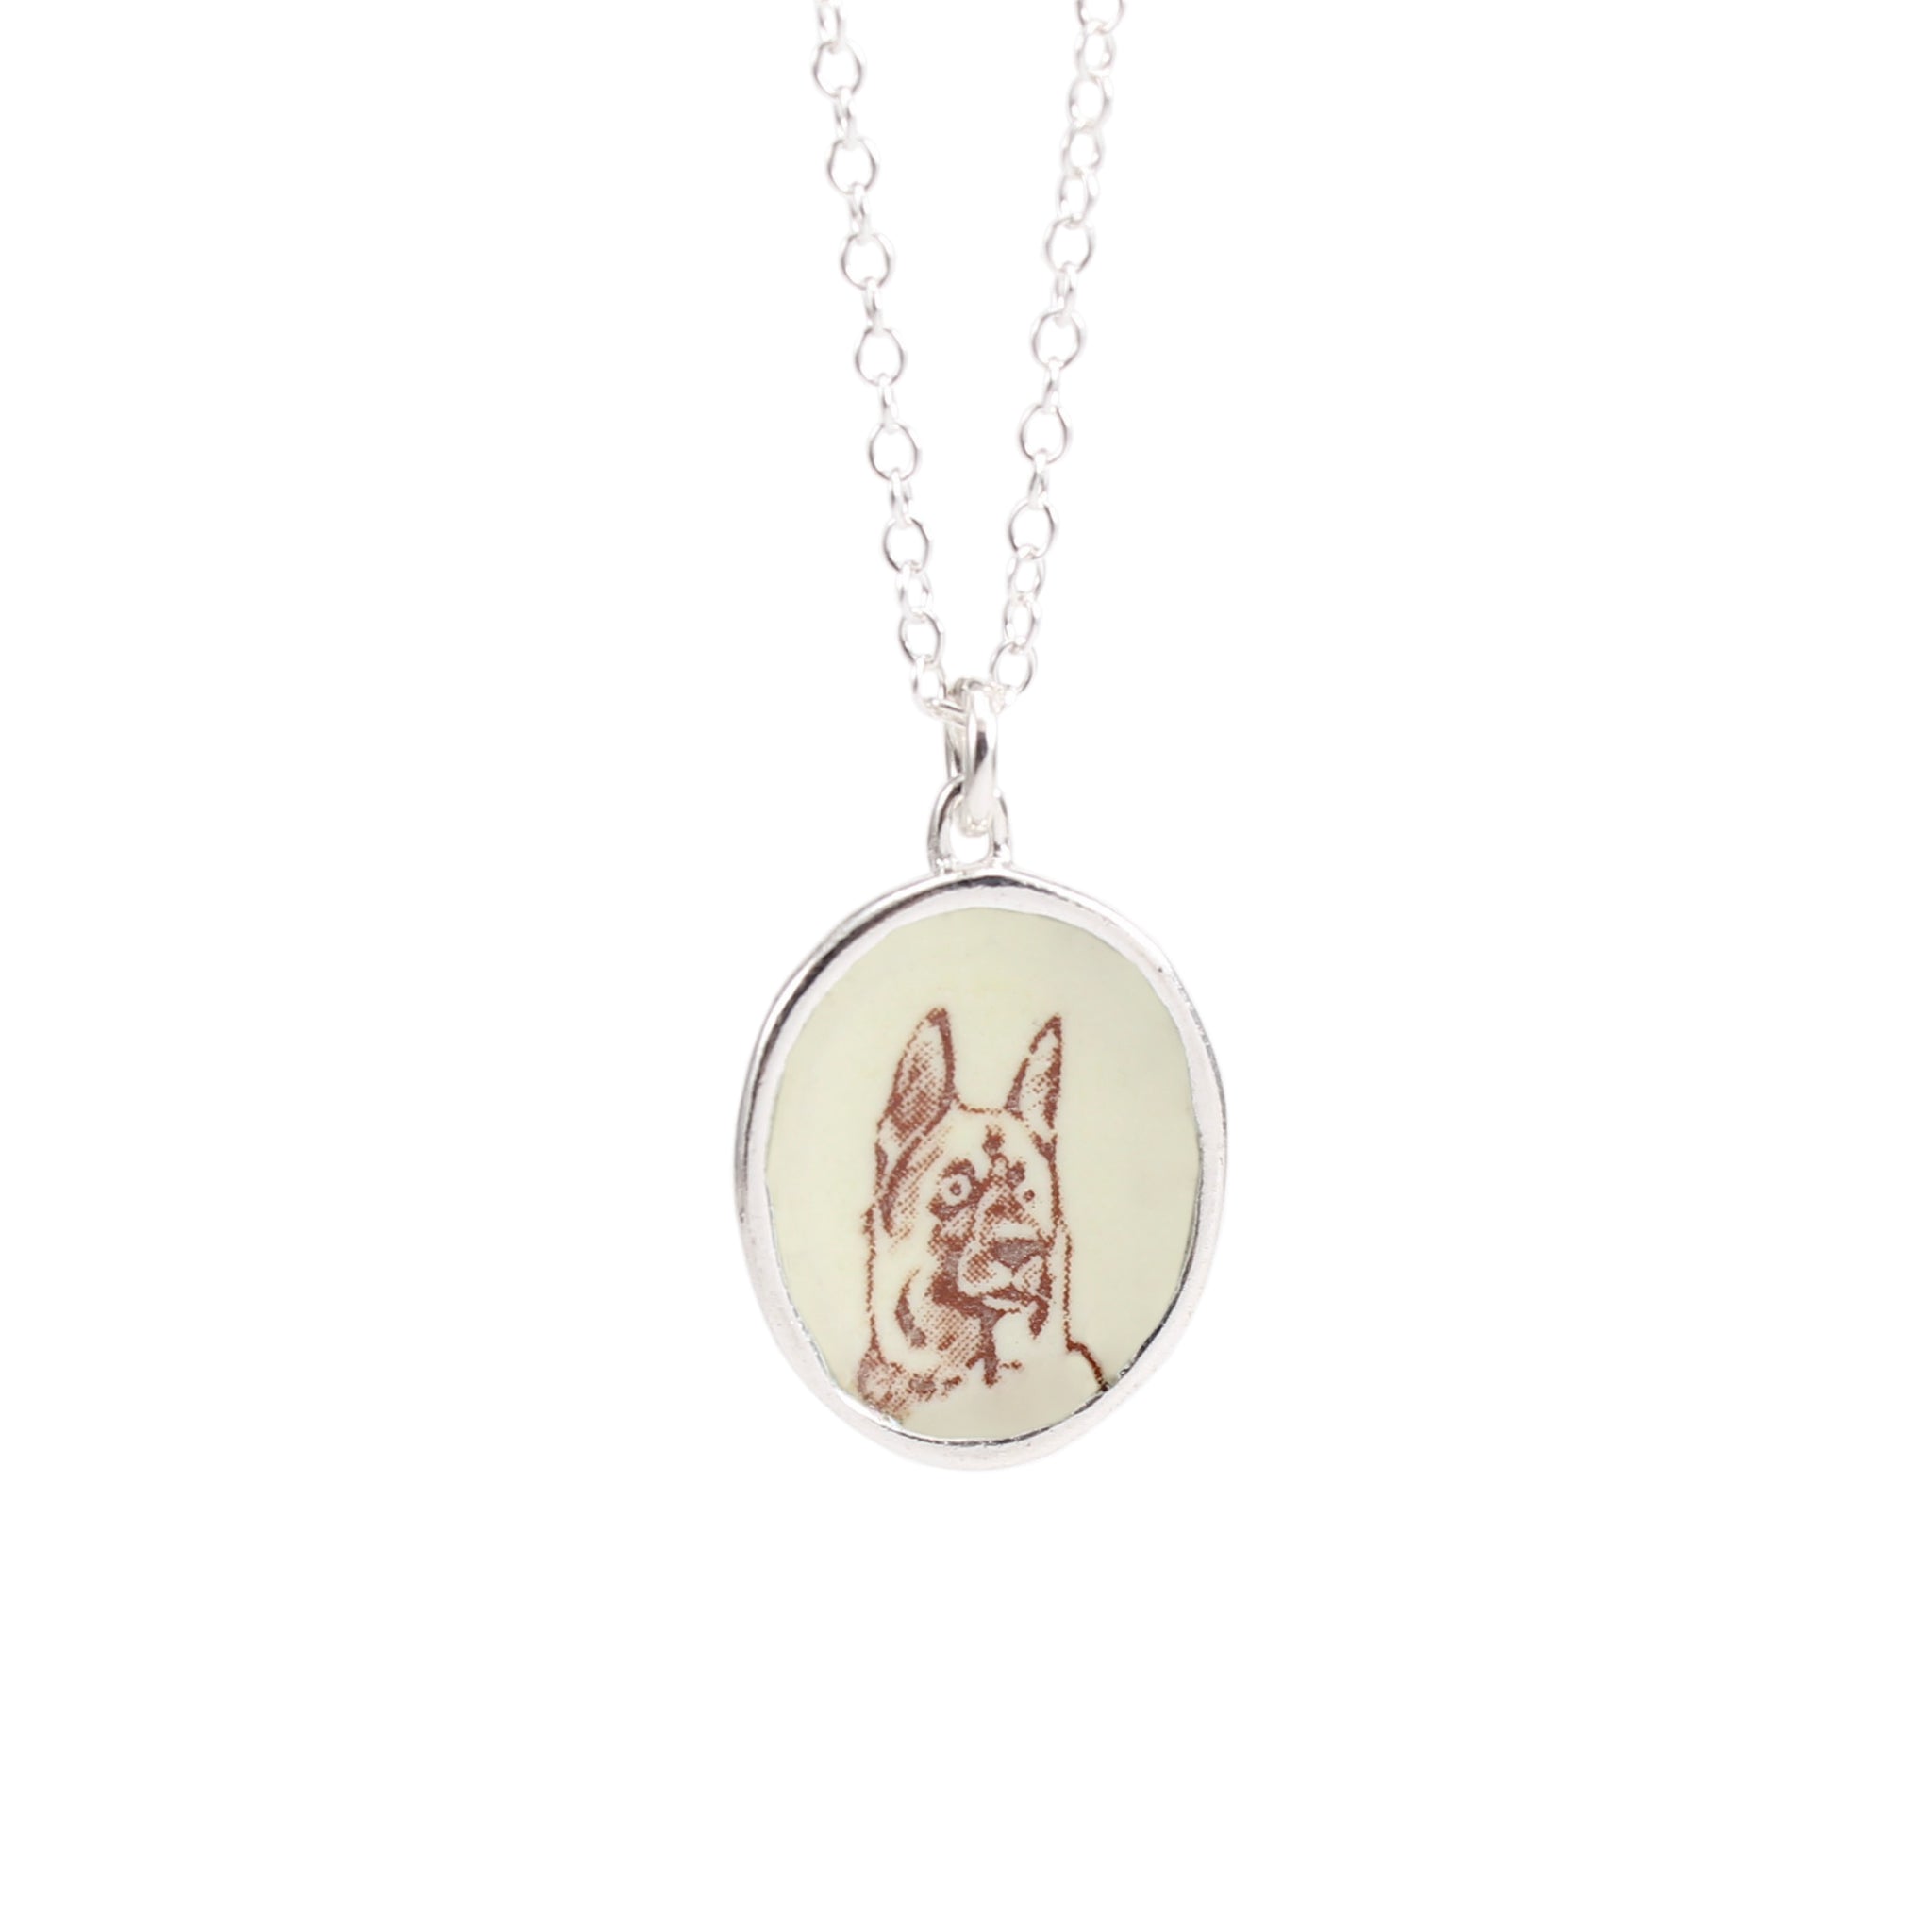 Buy German Shepherd National Animal Key Necklace Pendant Tray Embellished  Chain at Amazon.in